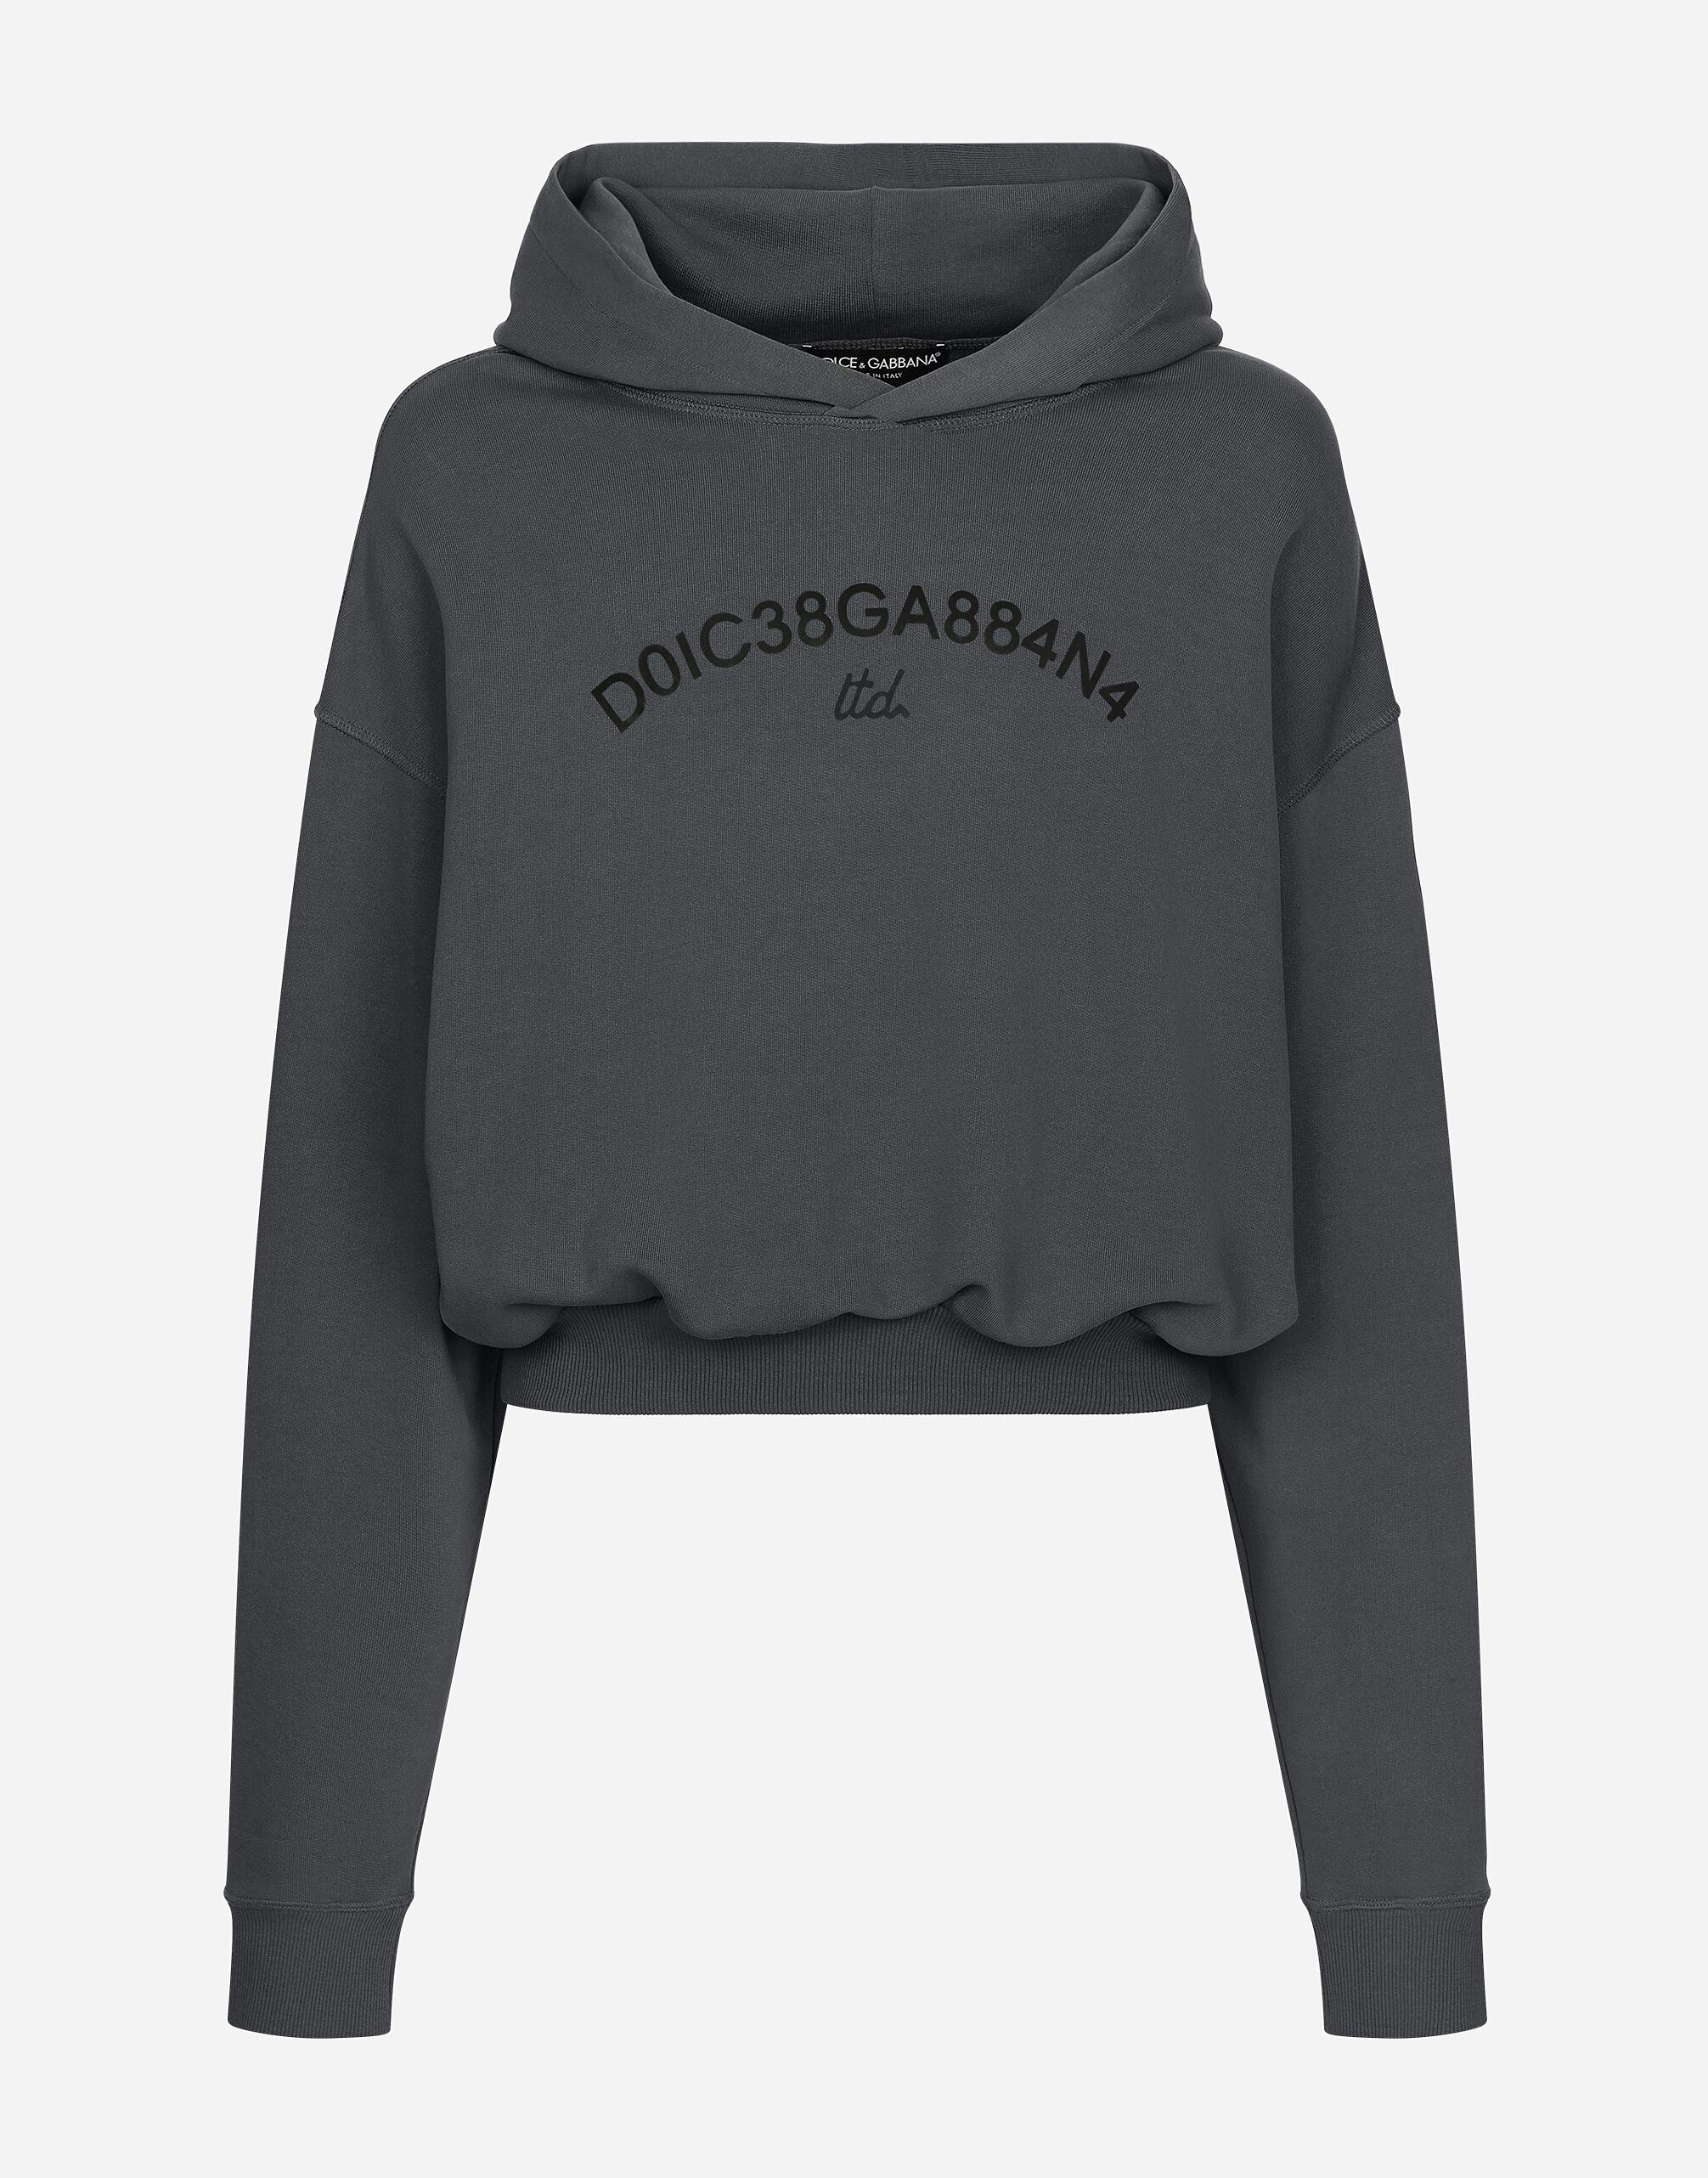 Dolce & Gabbana Cropped hoodie with Dolce&Gabbana logo Print G9AQVTHI7X6